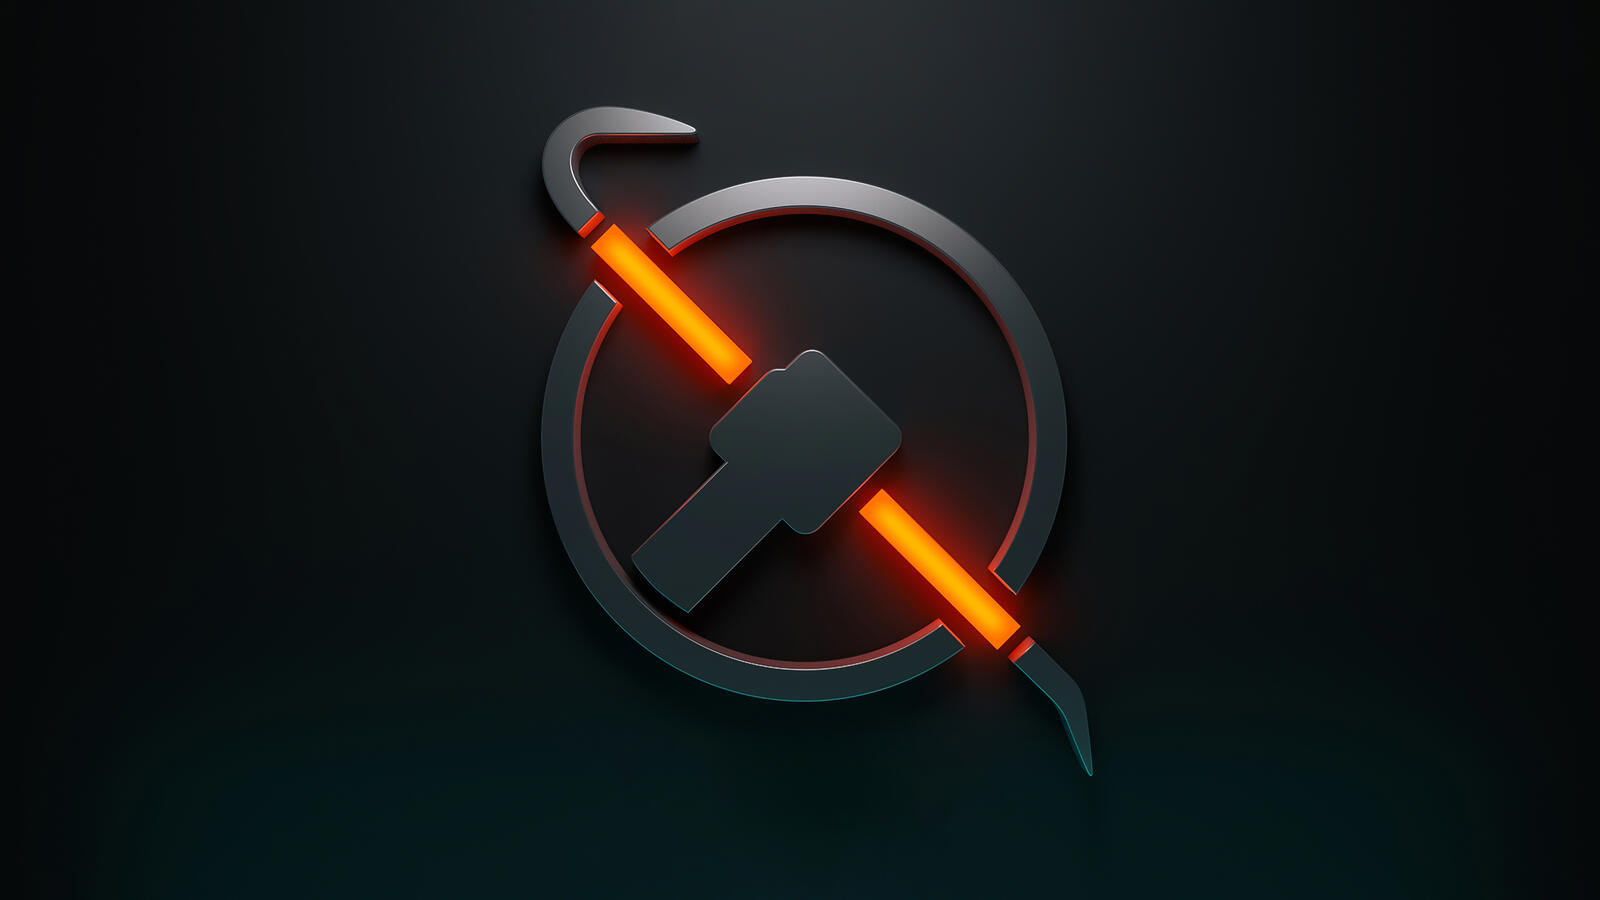 Free photo Half-Life 2 game logo on a dark background